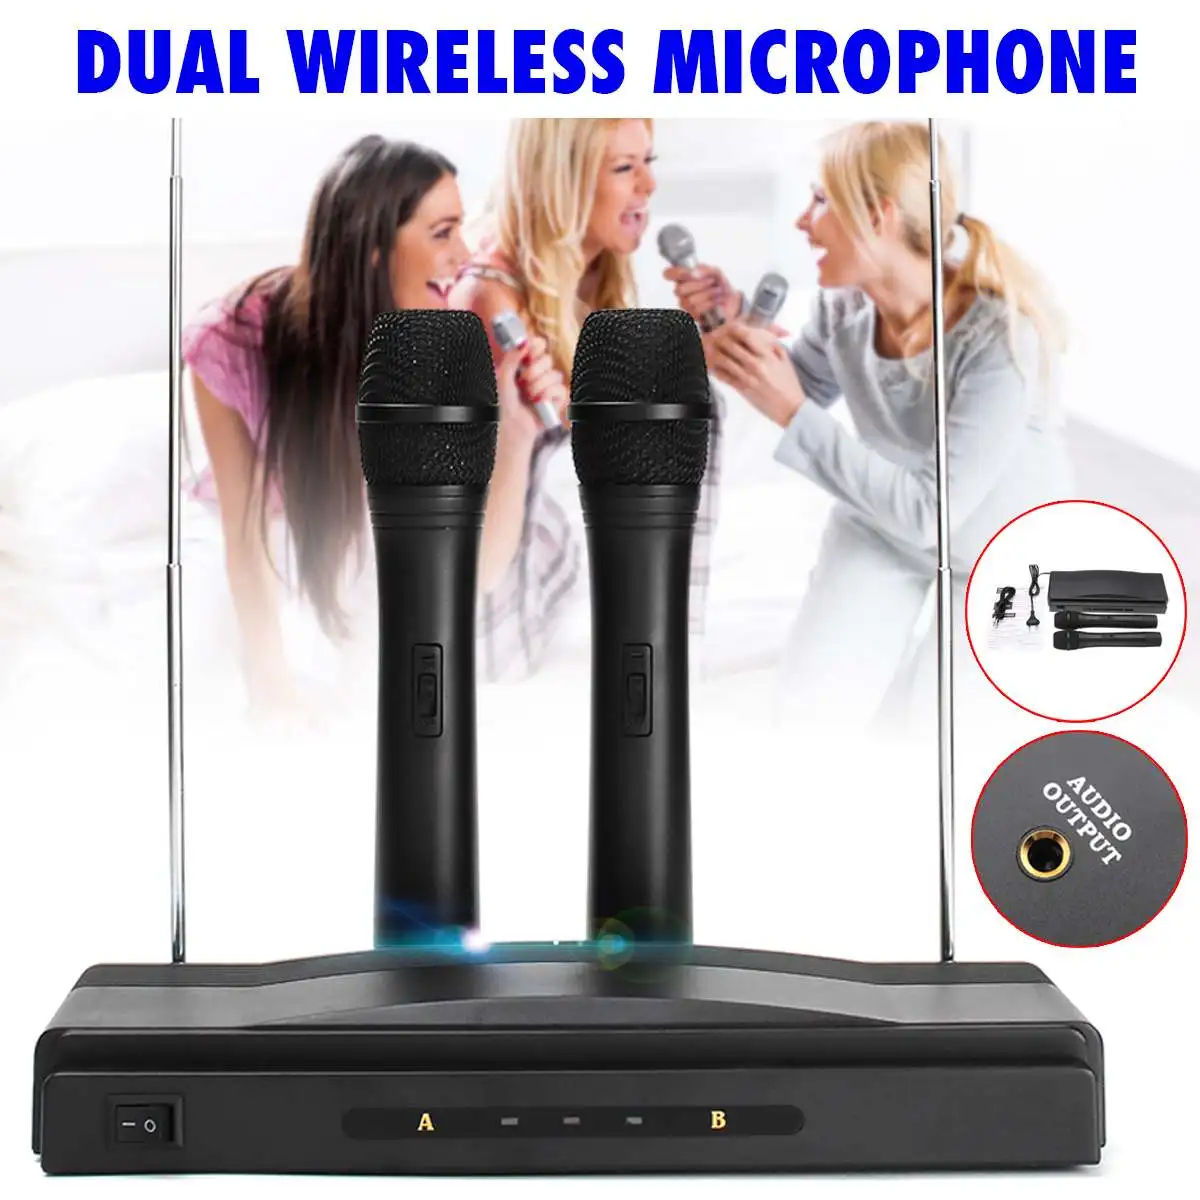 

AC220V VHF Wireless Cordless Microphones Dual Handheld Mic + Receiver System DJ Karaoke Meeting Speech Home Audio Loud Voice